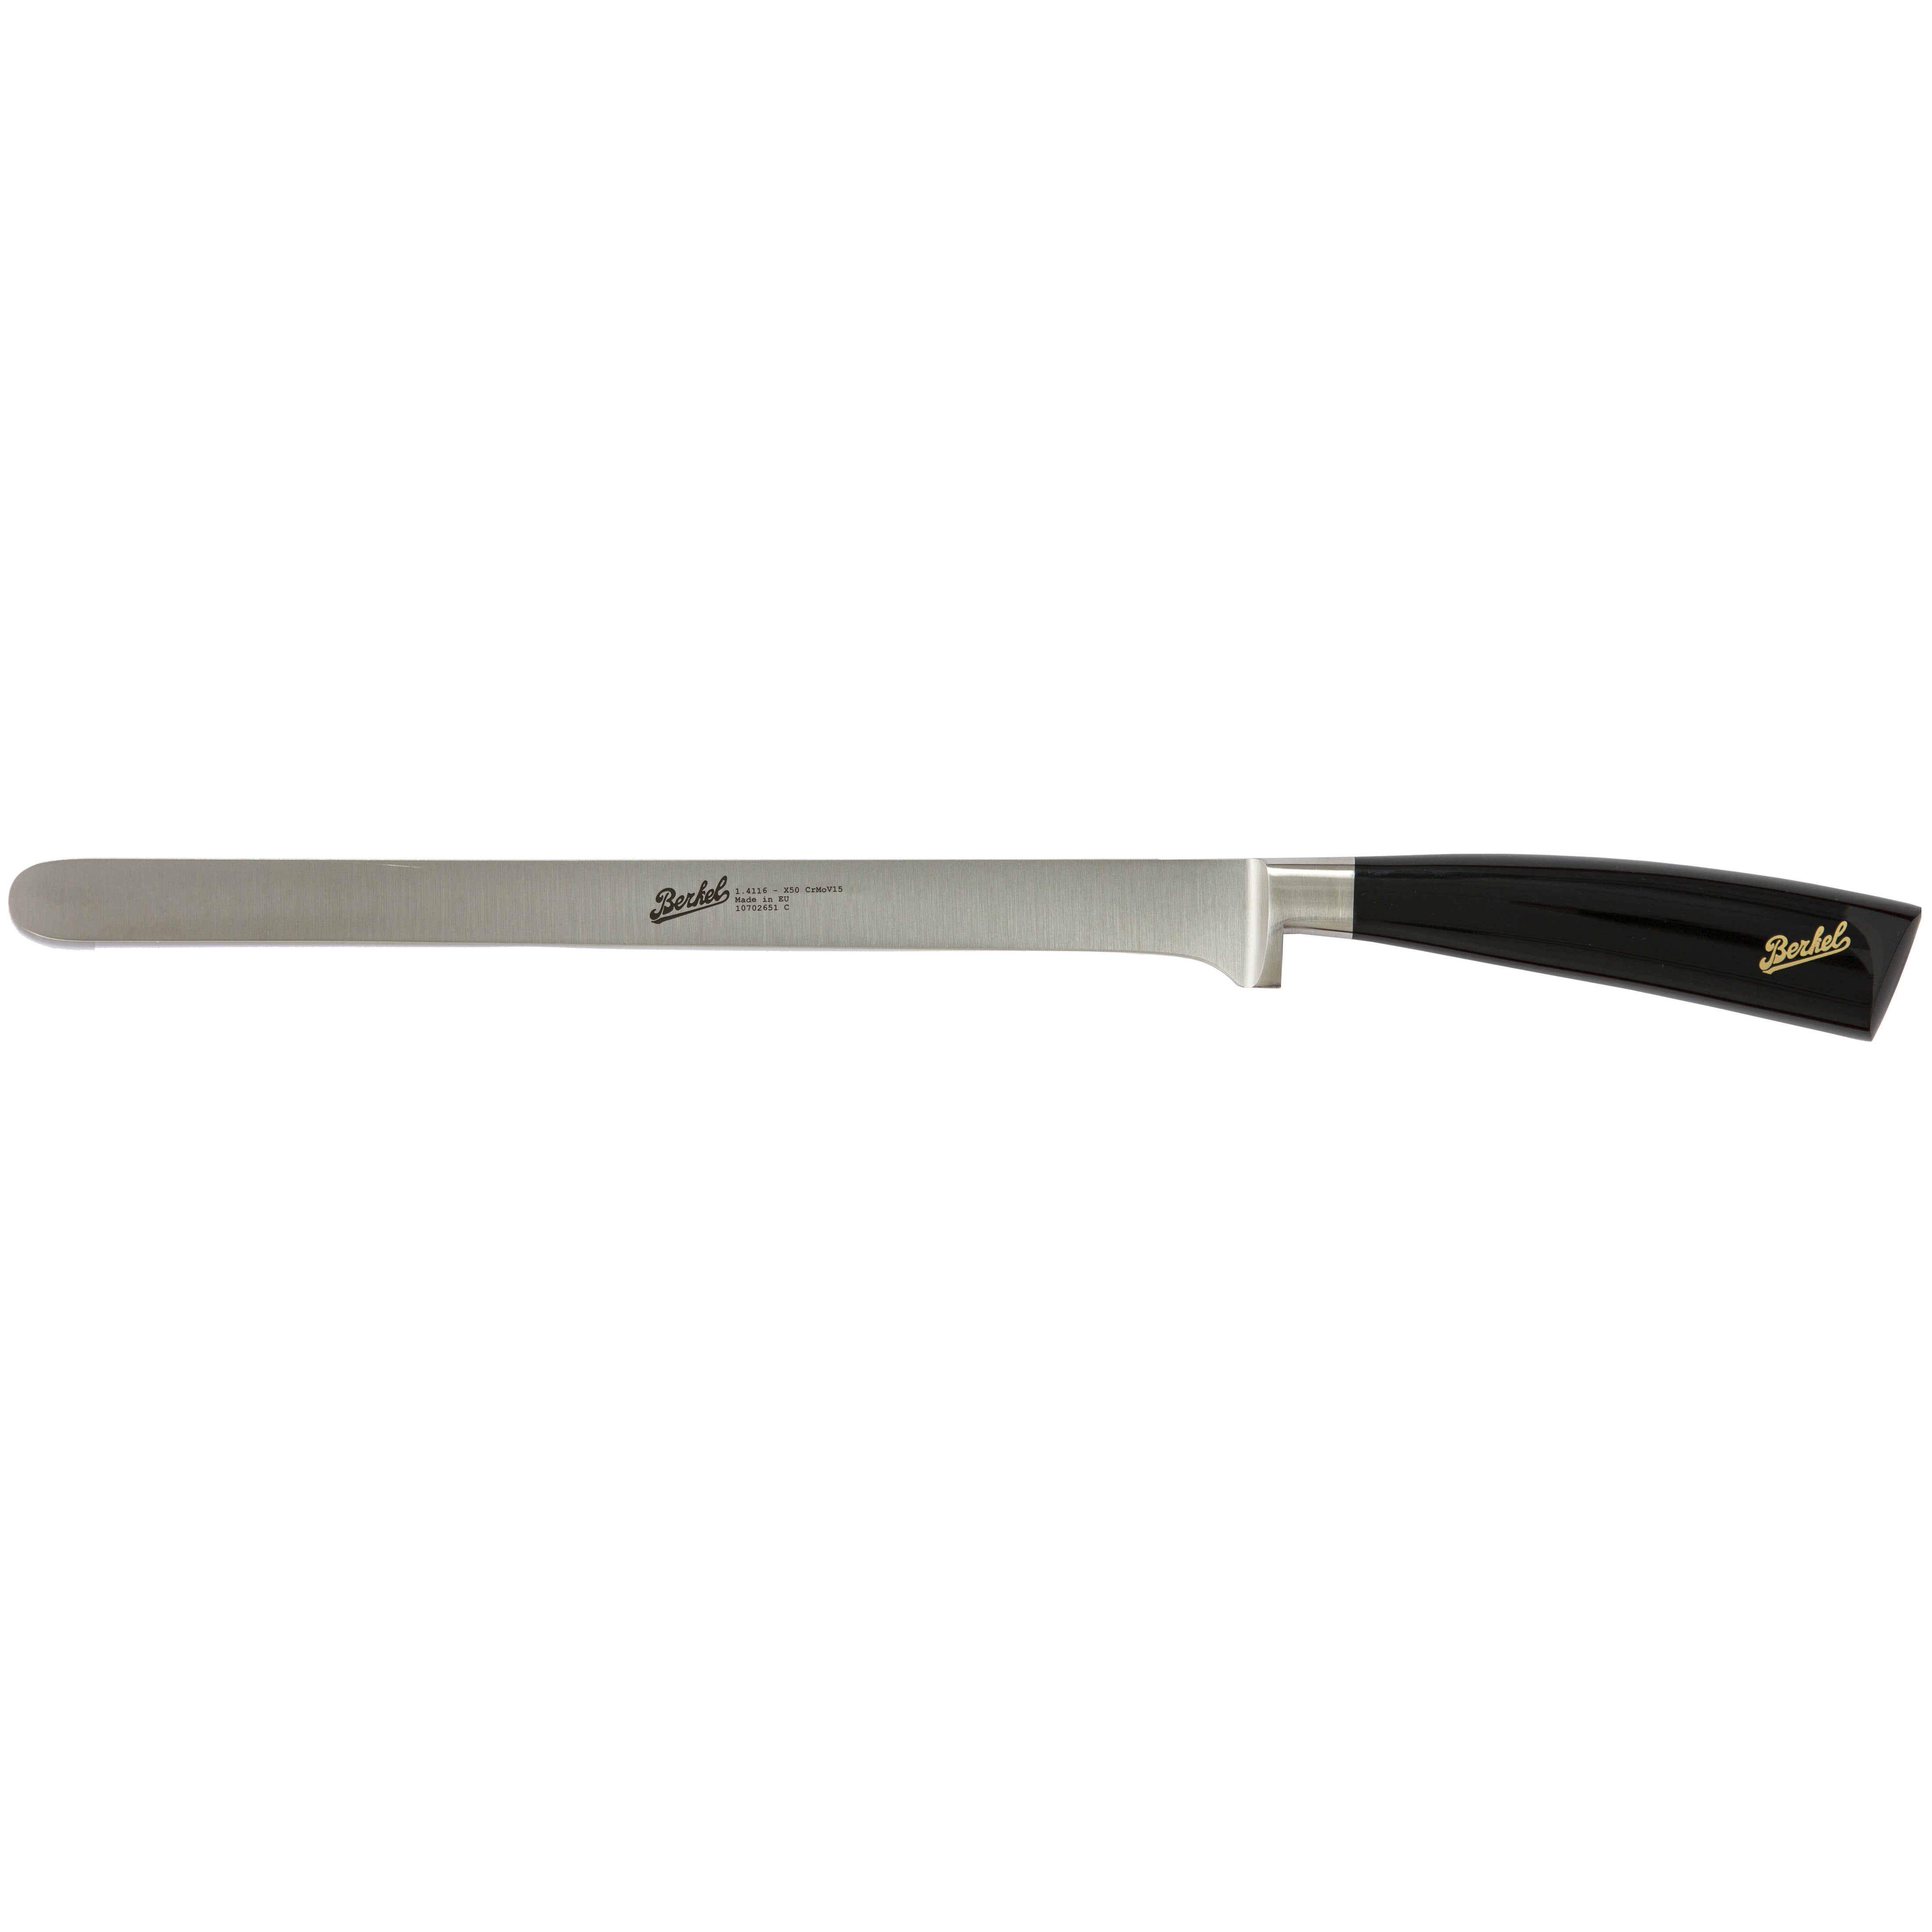 Berkel Elegance Ham knife 26cm